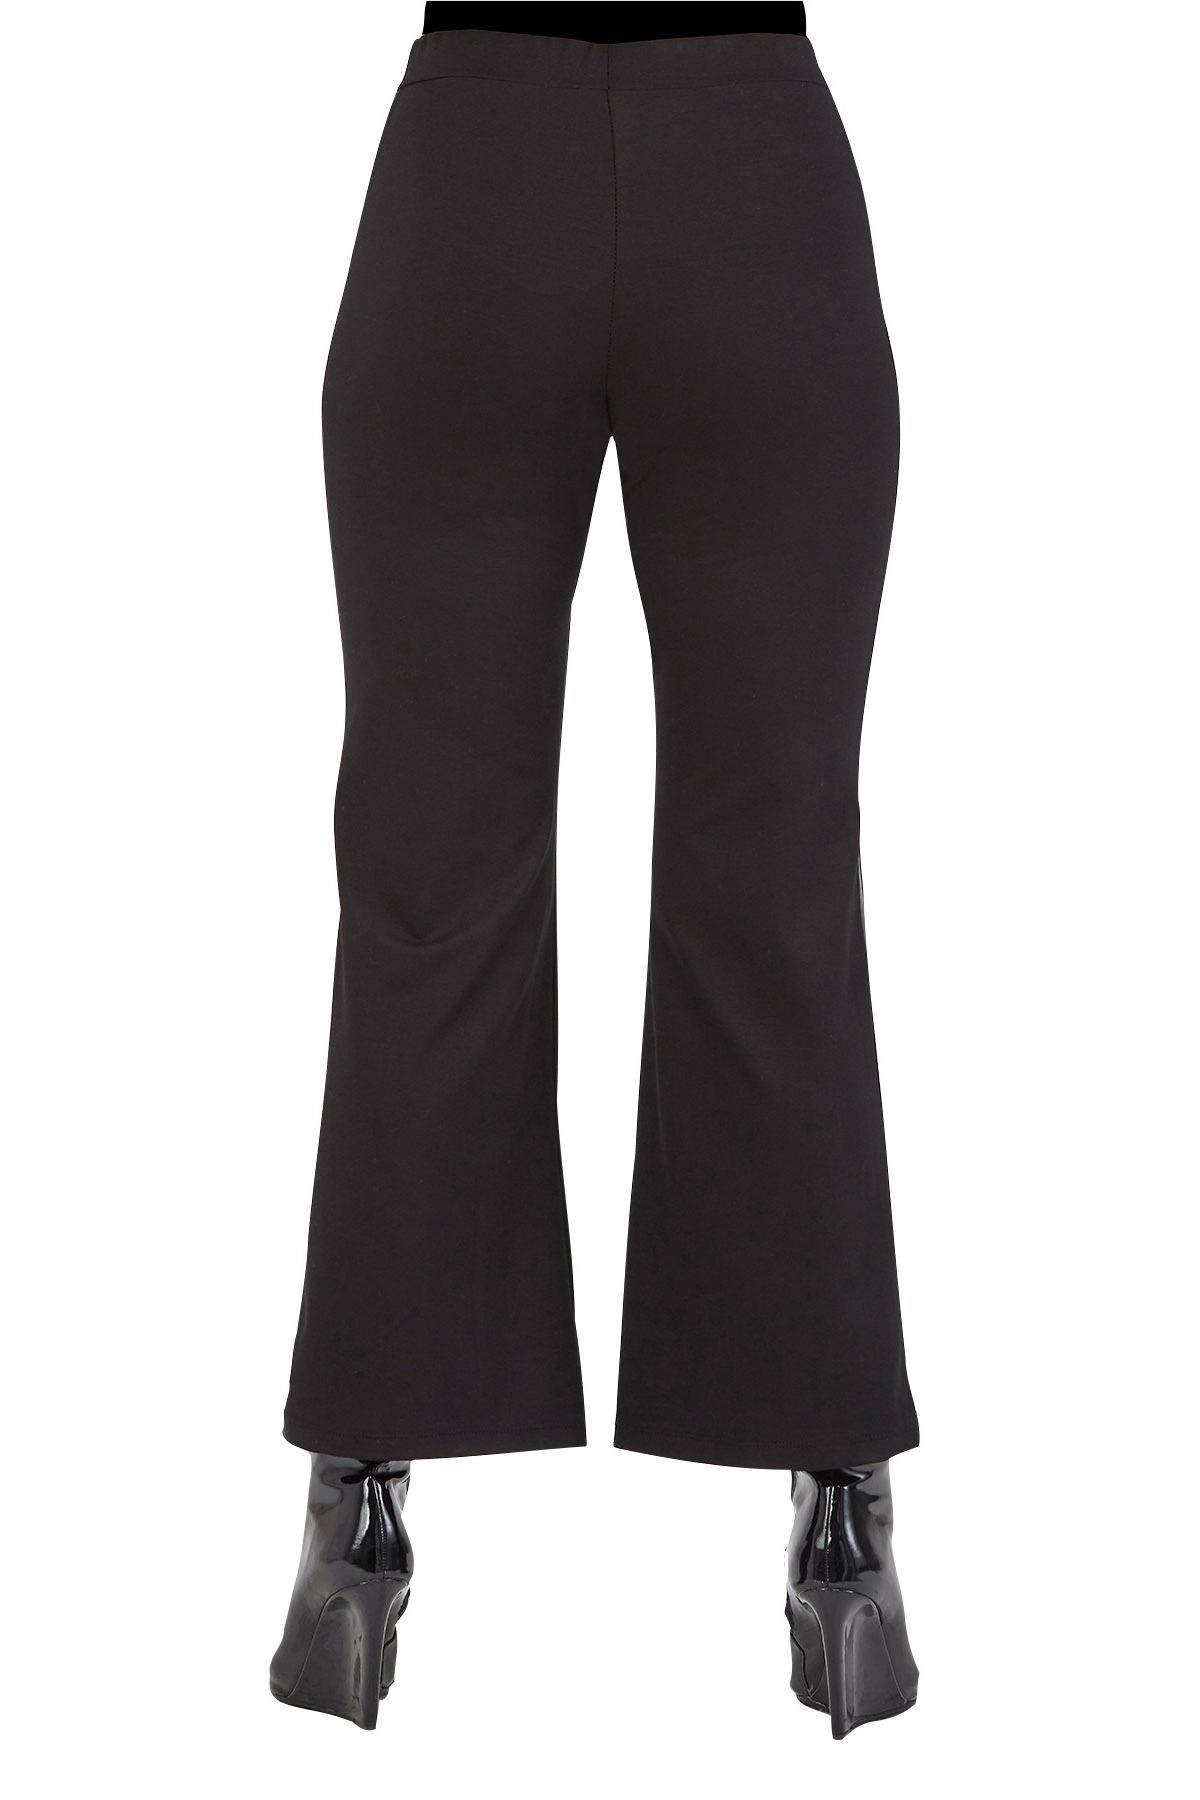 fierte-kadin-buyuk-beden-pantolon-lm52110-yuksek-elastik-bel-ispanyol-paca-deri-serit-siyah-26508.jpg